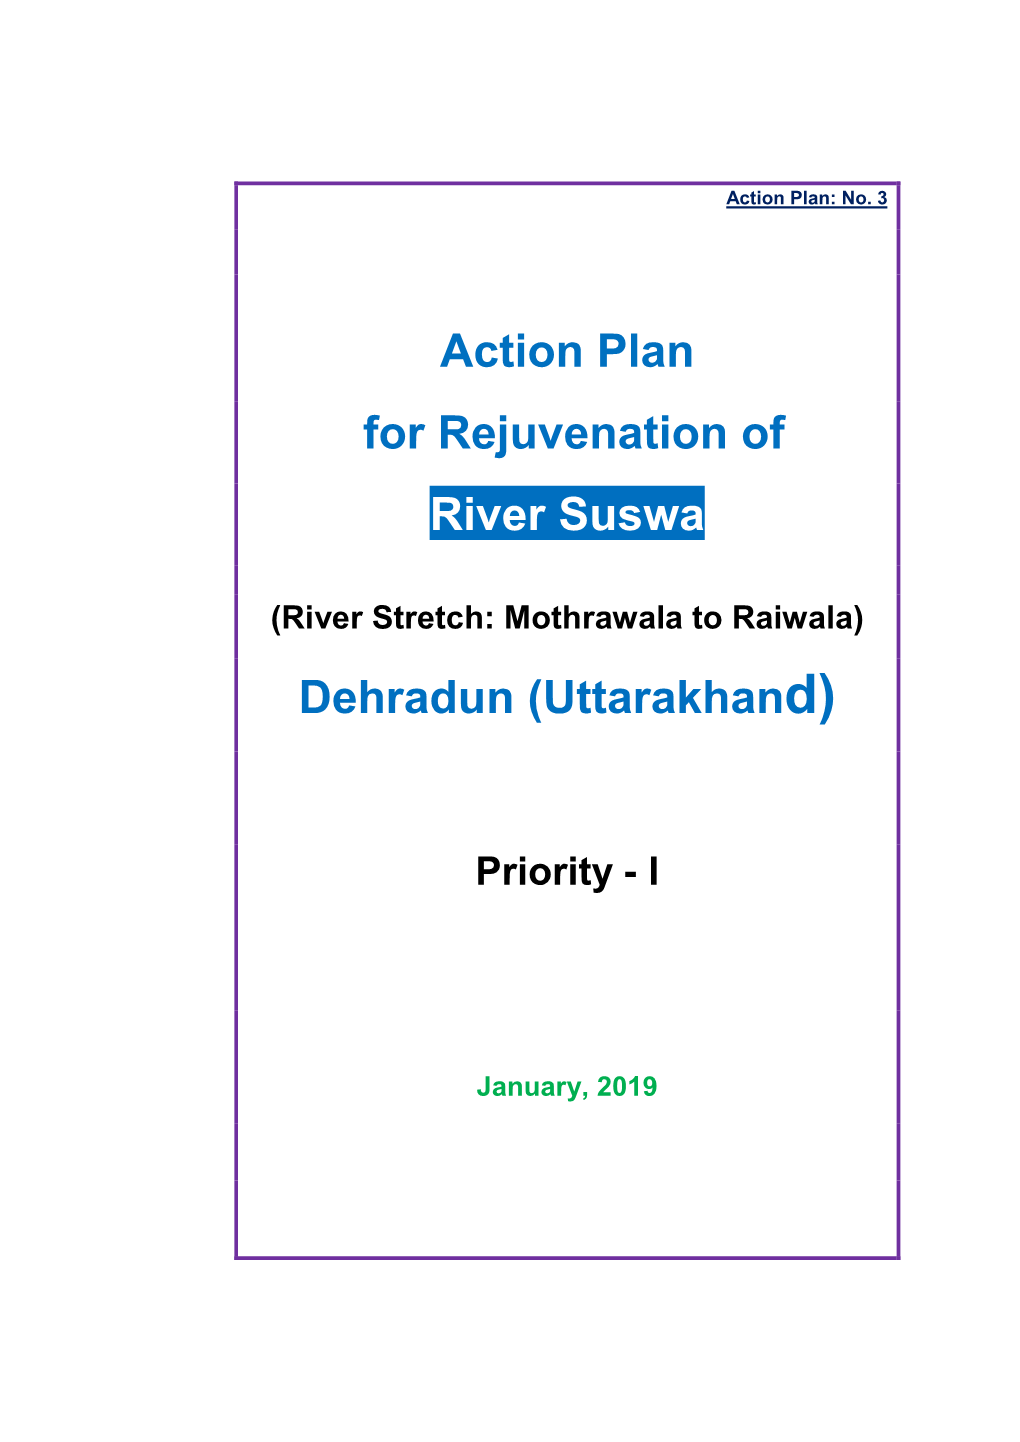 Action Plan for Rejuvenation of River Suswa Dehradun (Uttarakhand)